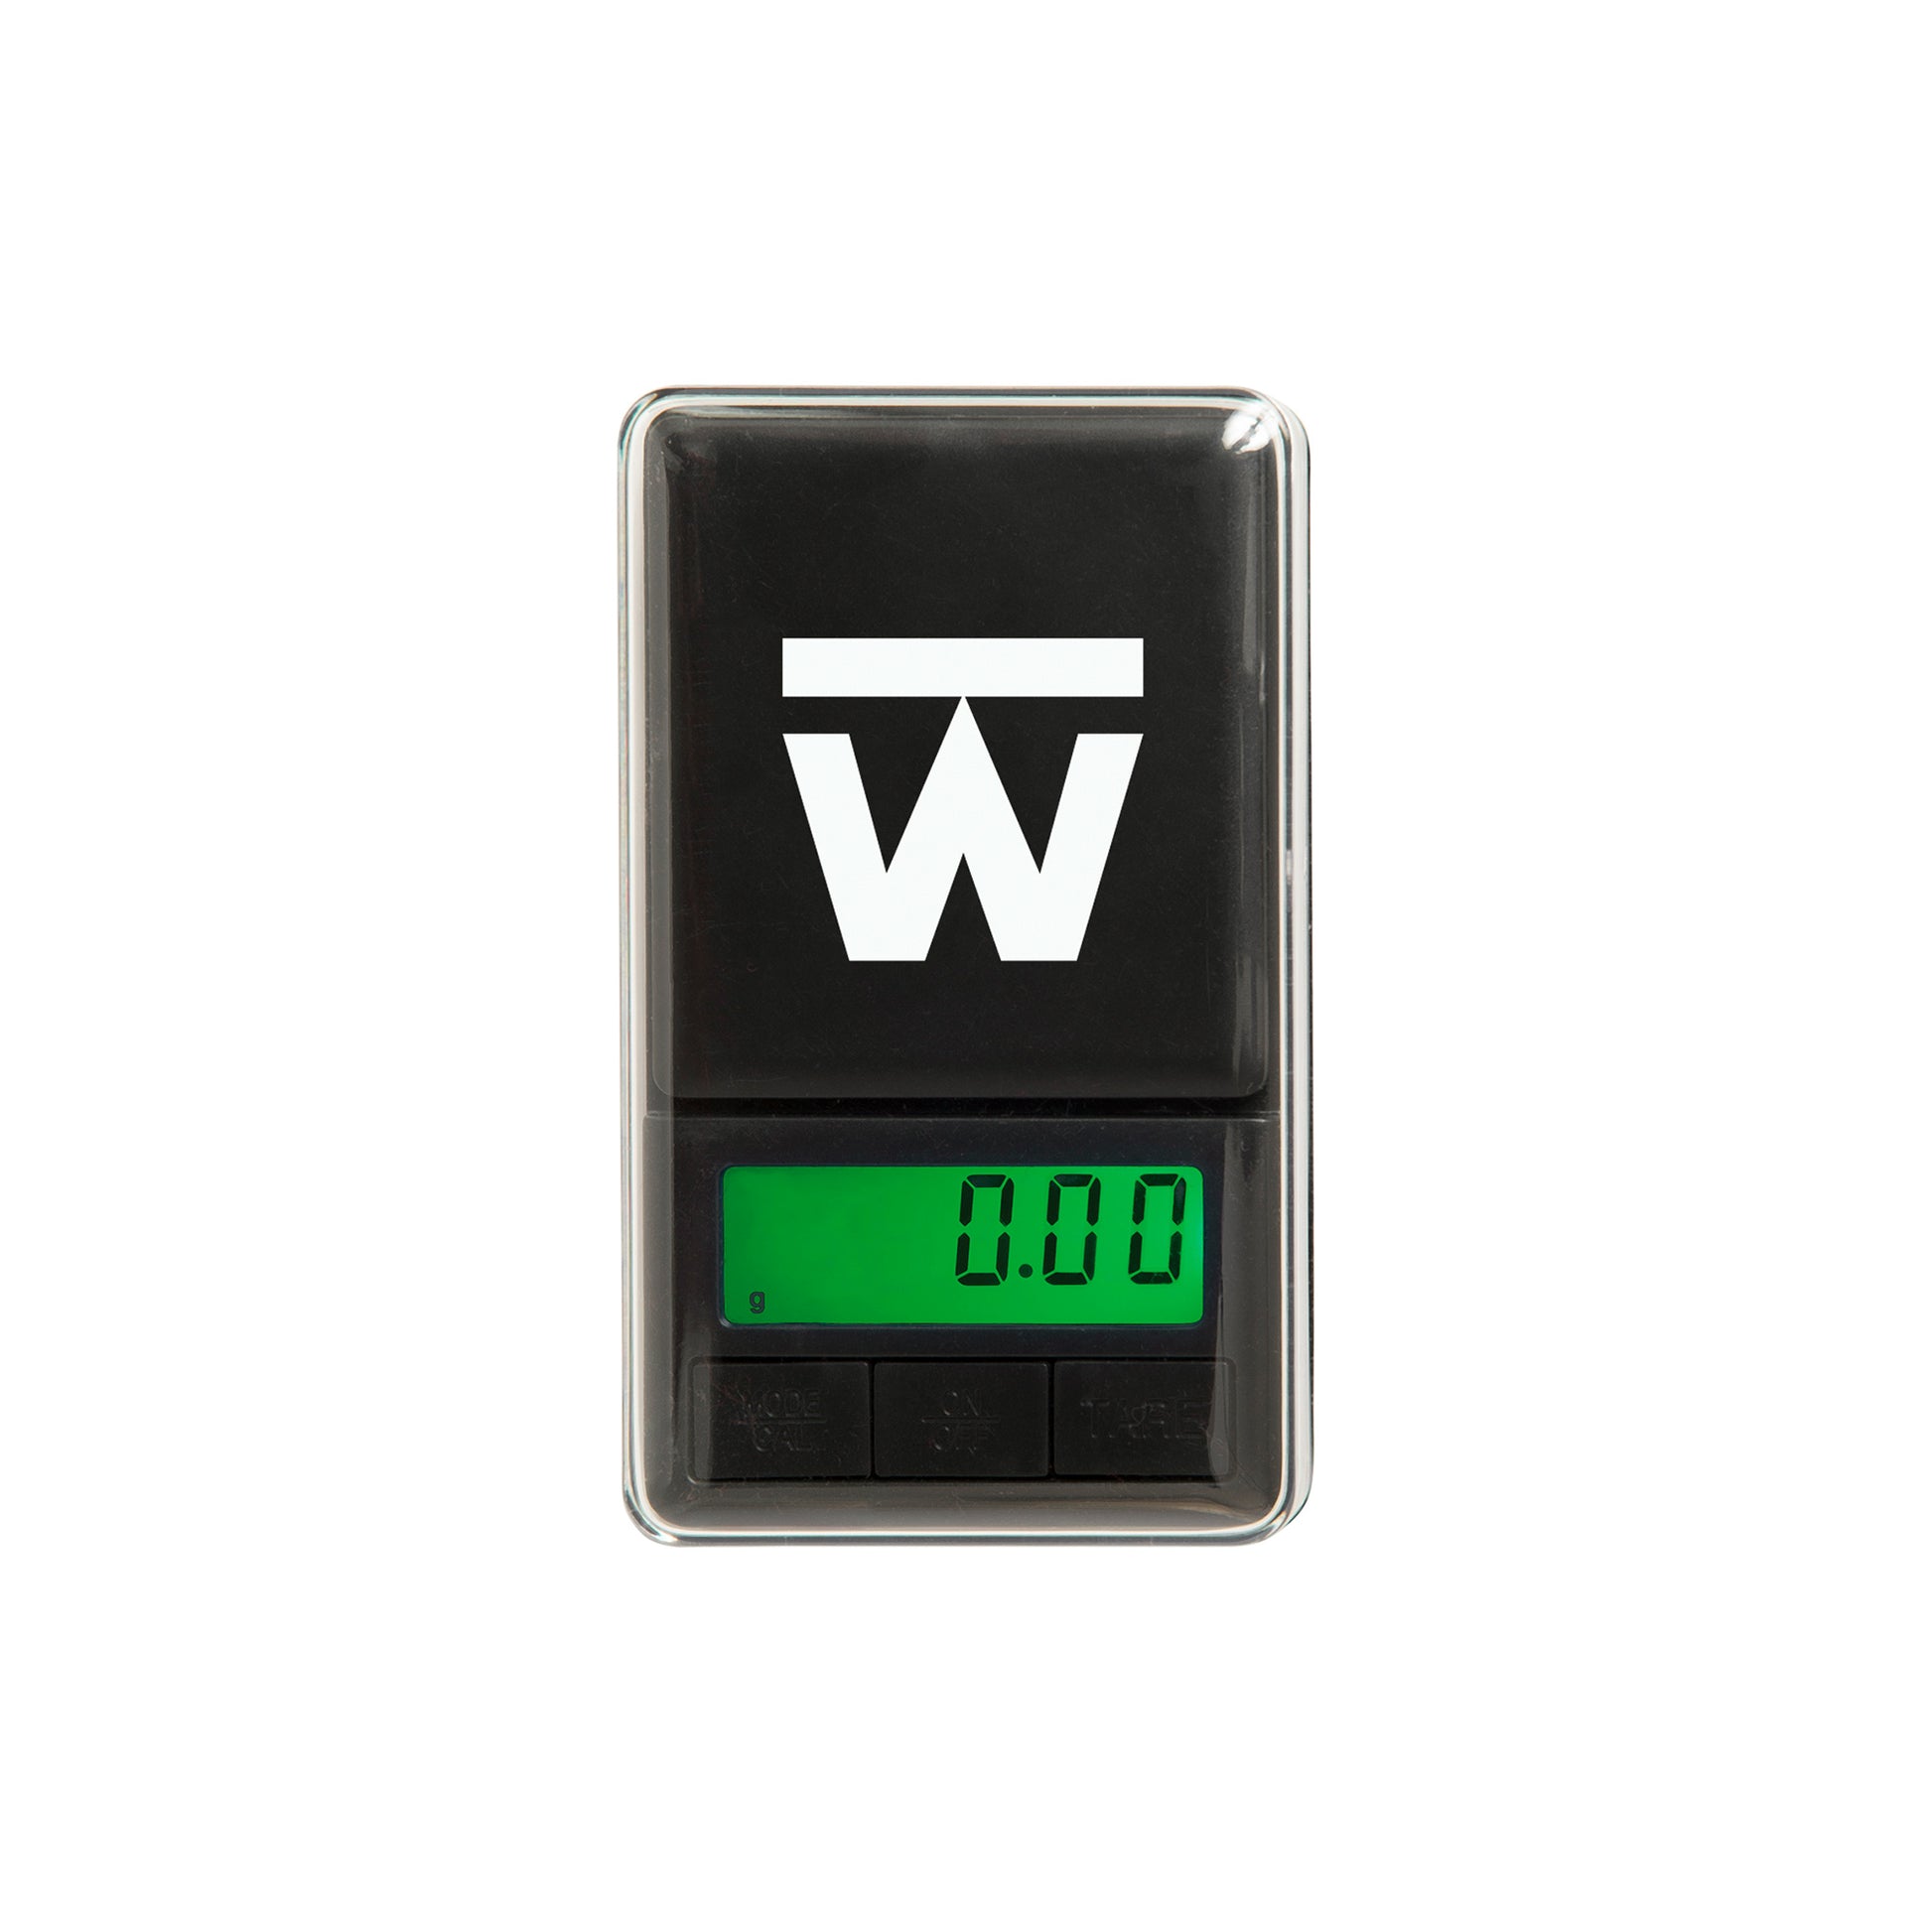 Clearance item - 100g x 0.01g Digital Pocket Scale Ultra mini Precisio 